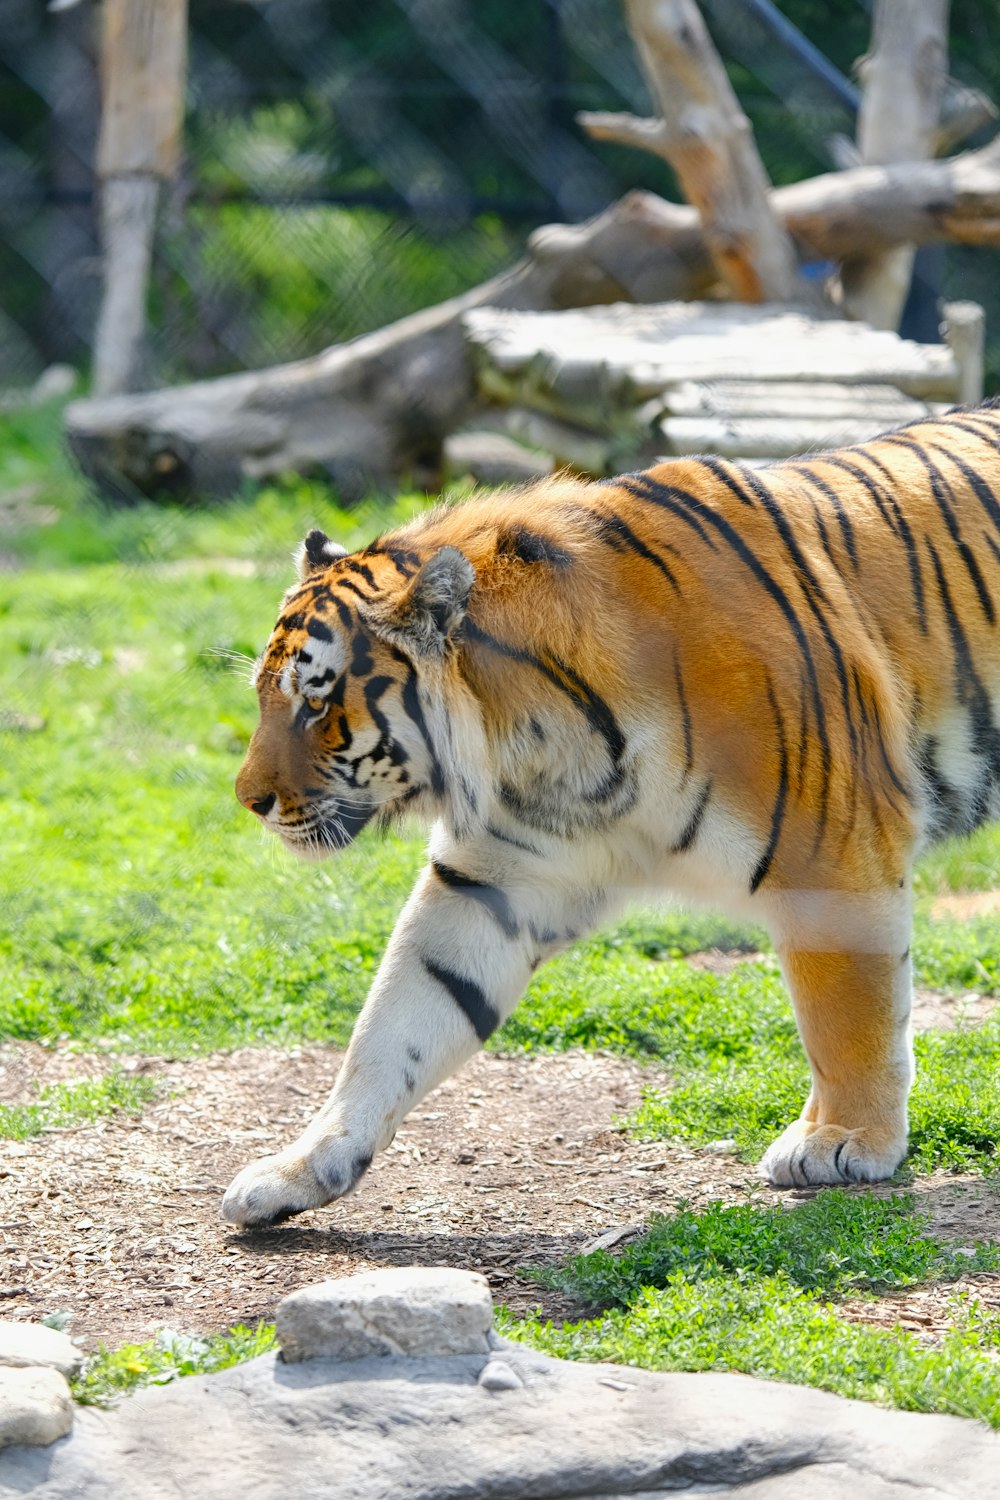 a tiger walking across a lush green field